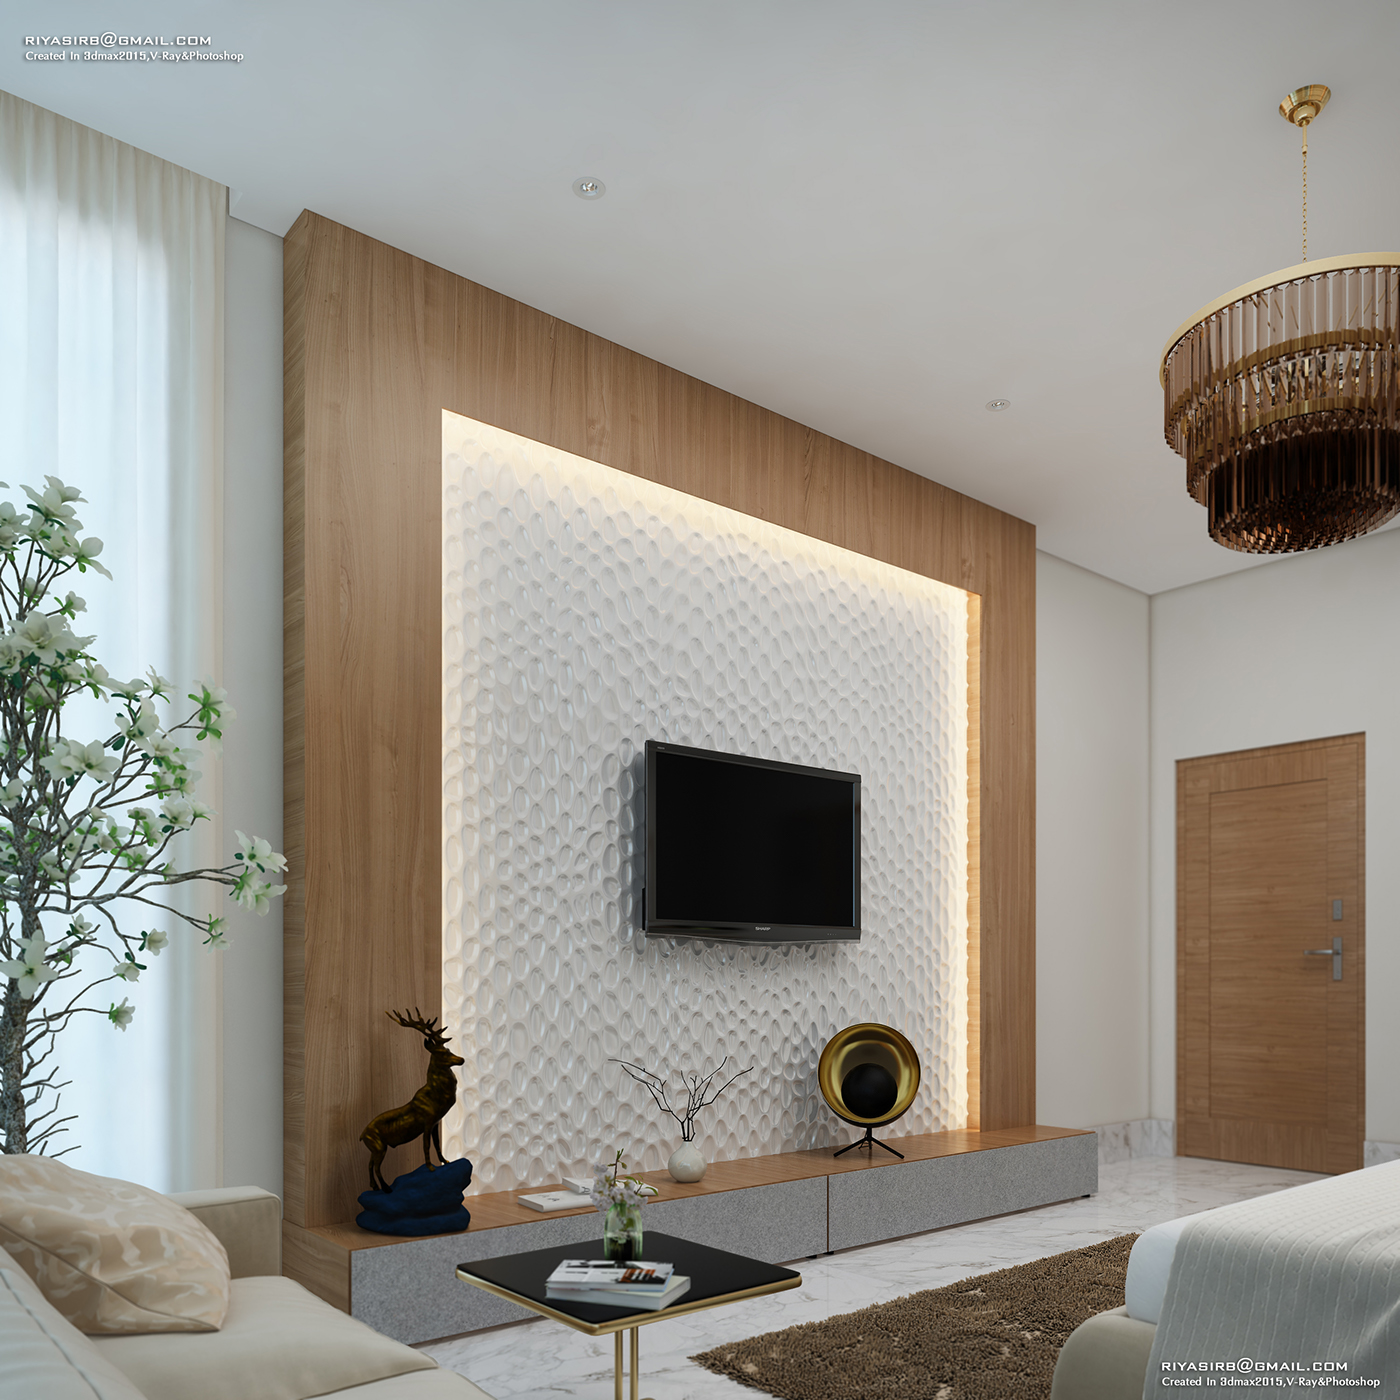 3dsmax vray Interior dubai photoshop bedroom modern interior design  Render 3D